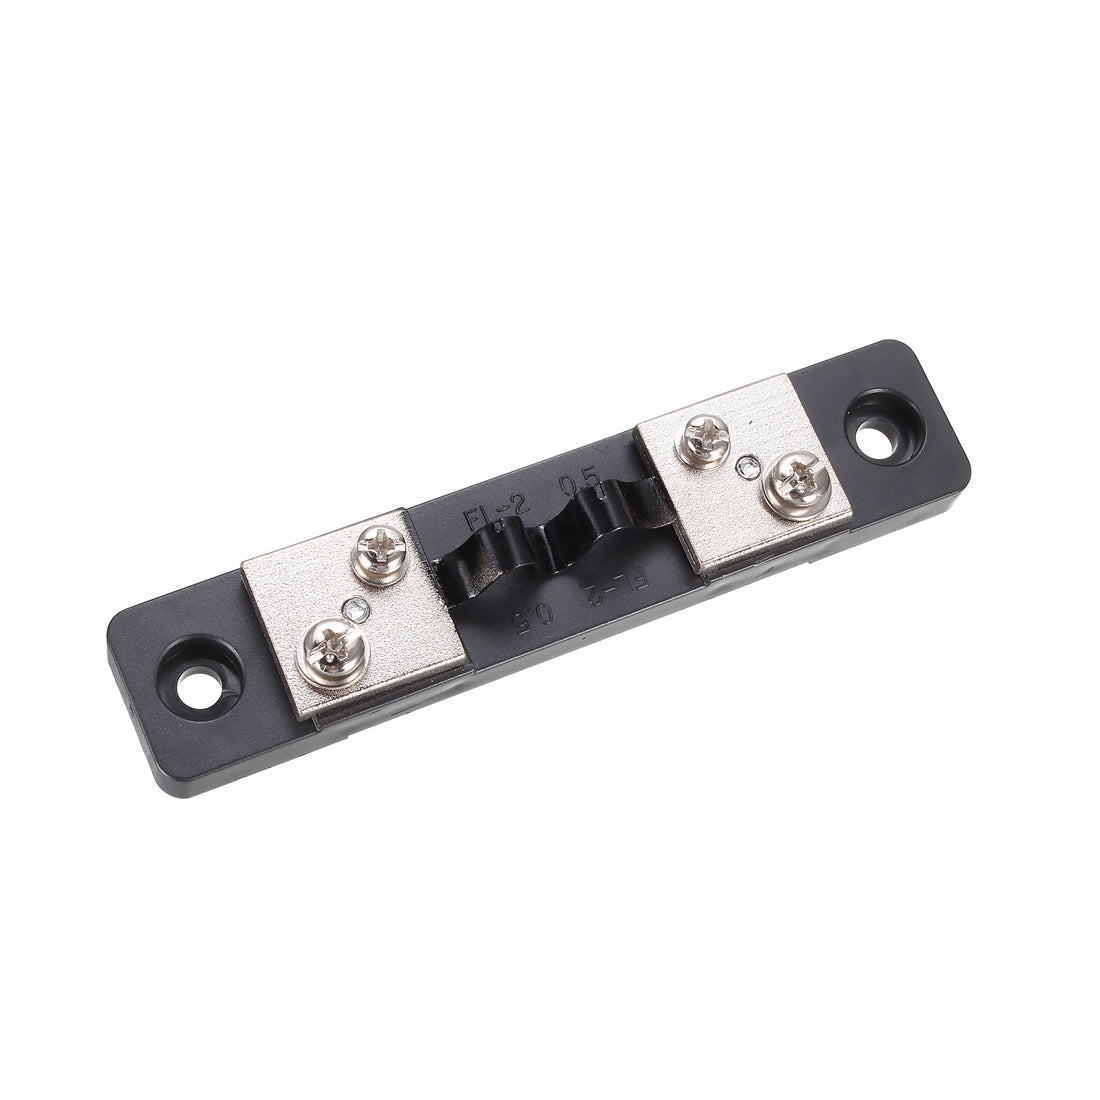 uxcell Uxcell Shunt Resistor 10A 75mV for DC Ammeter Panel Meter External FL-2 Shunt